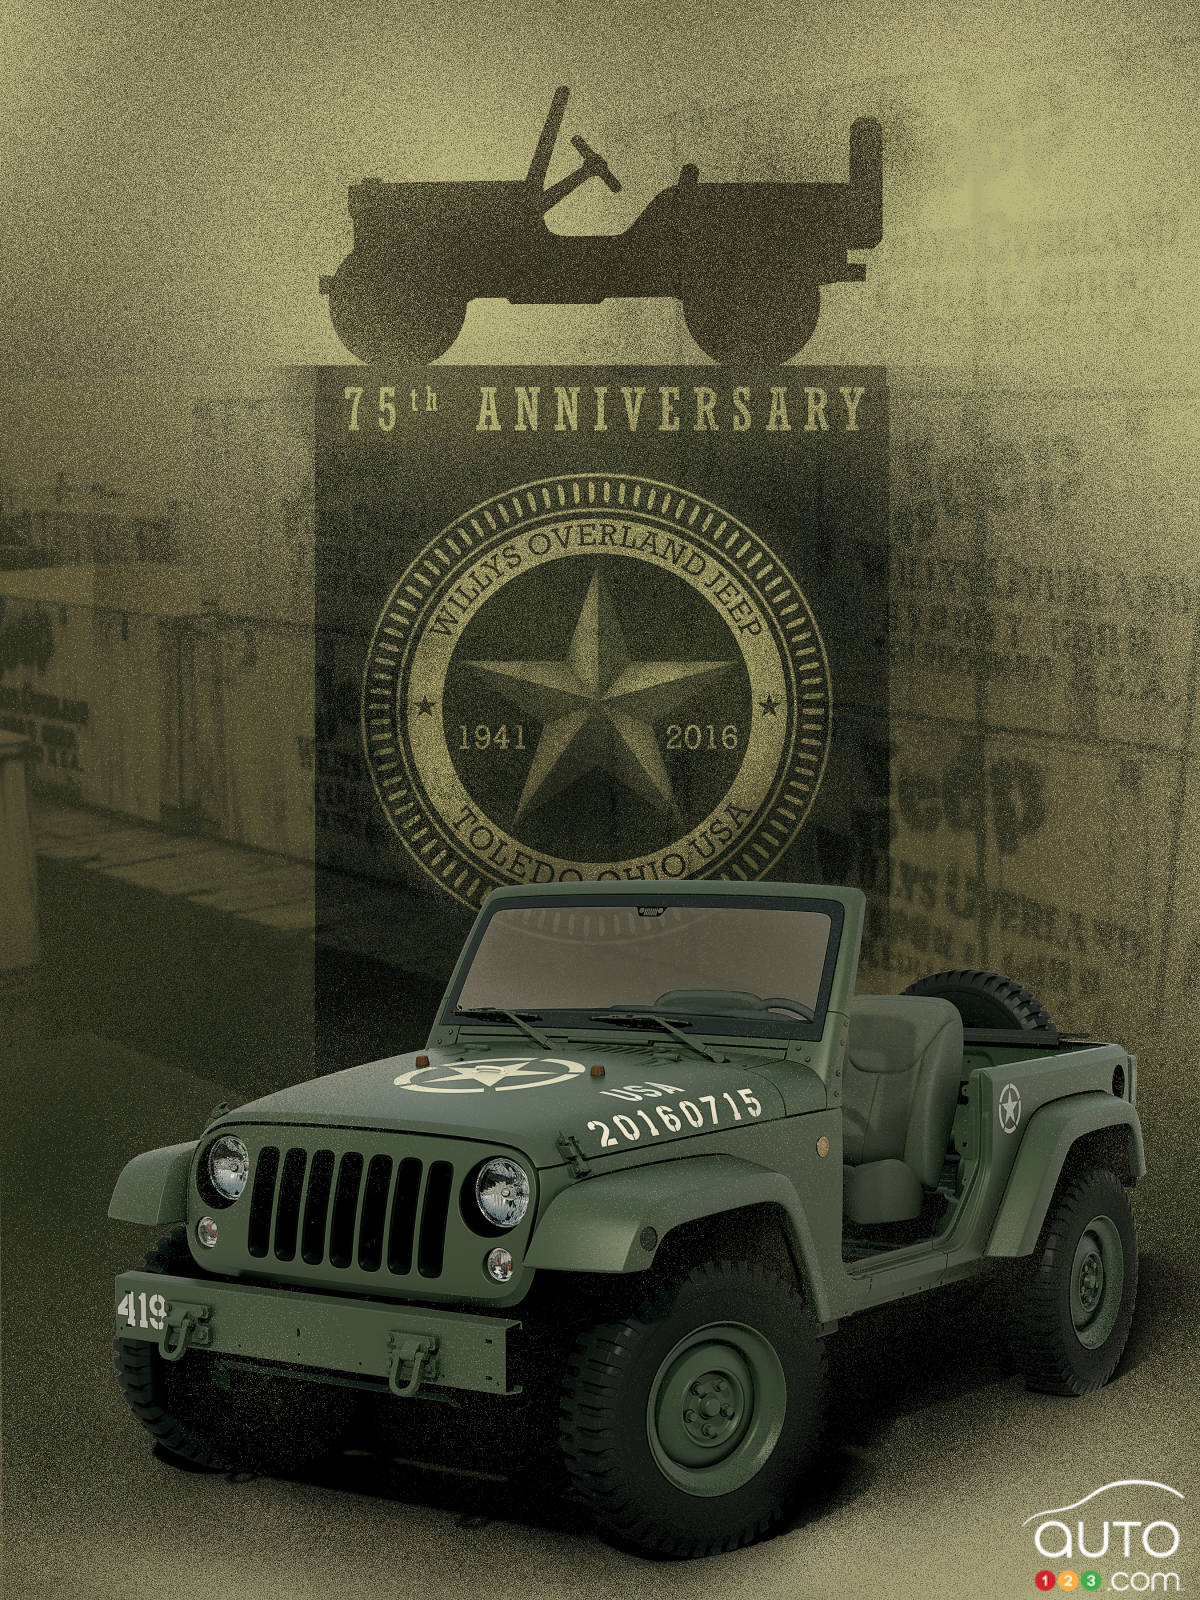 Un concept unique : le Jeep Wrangler 75e anniversaire Salute